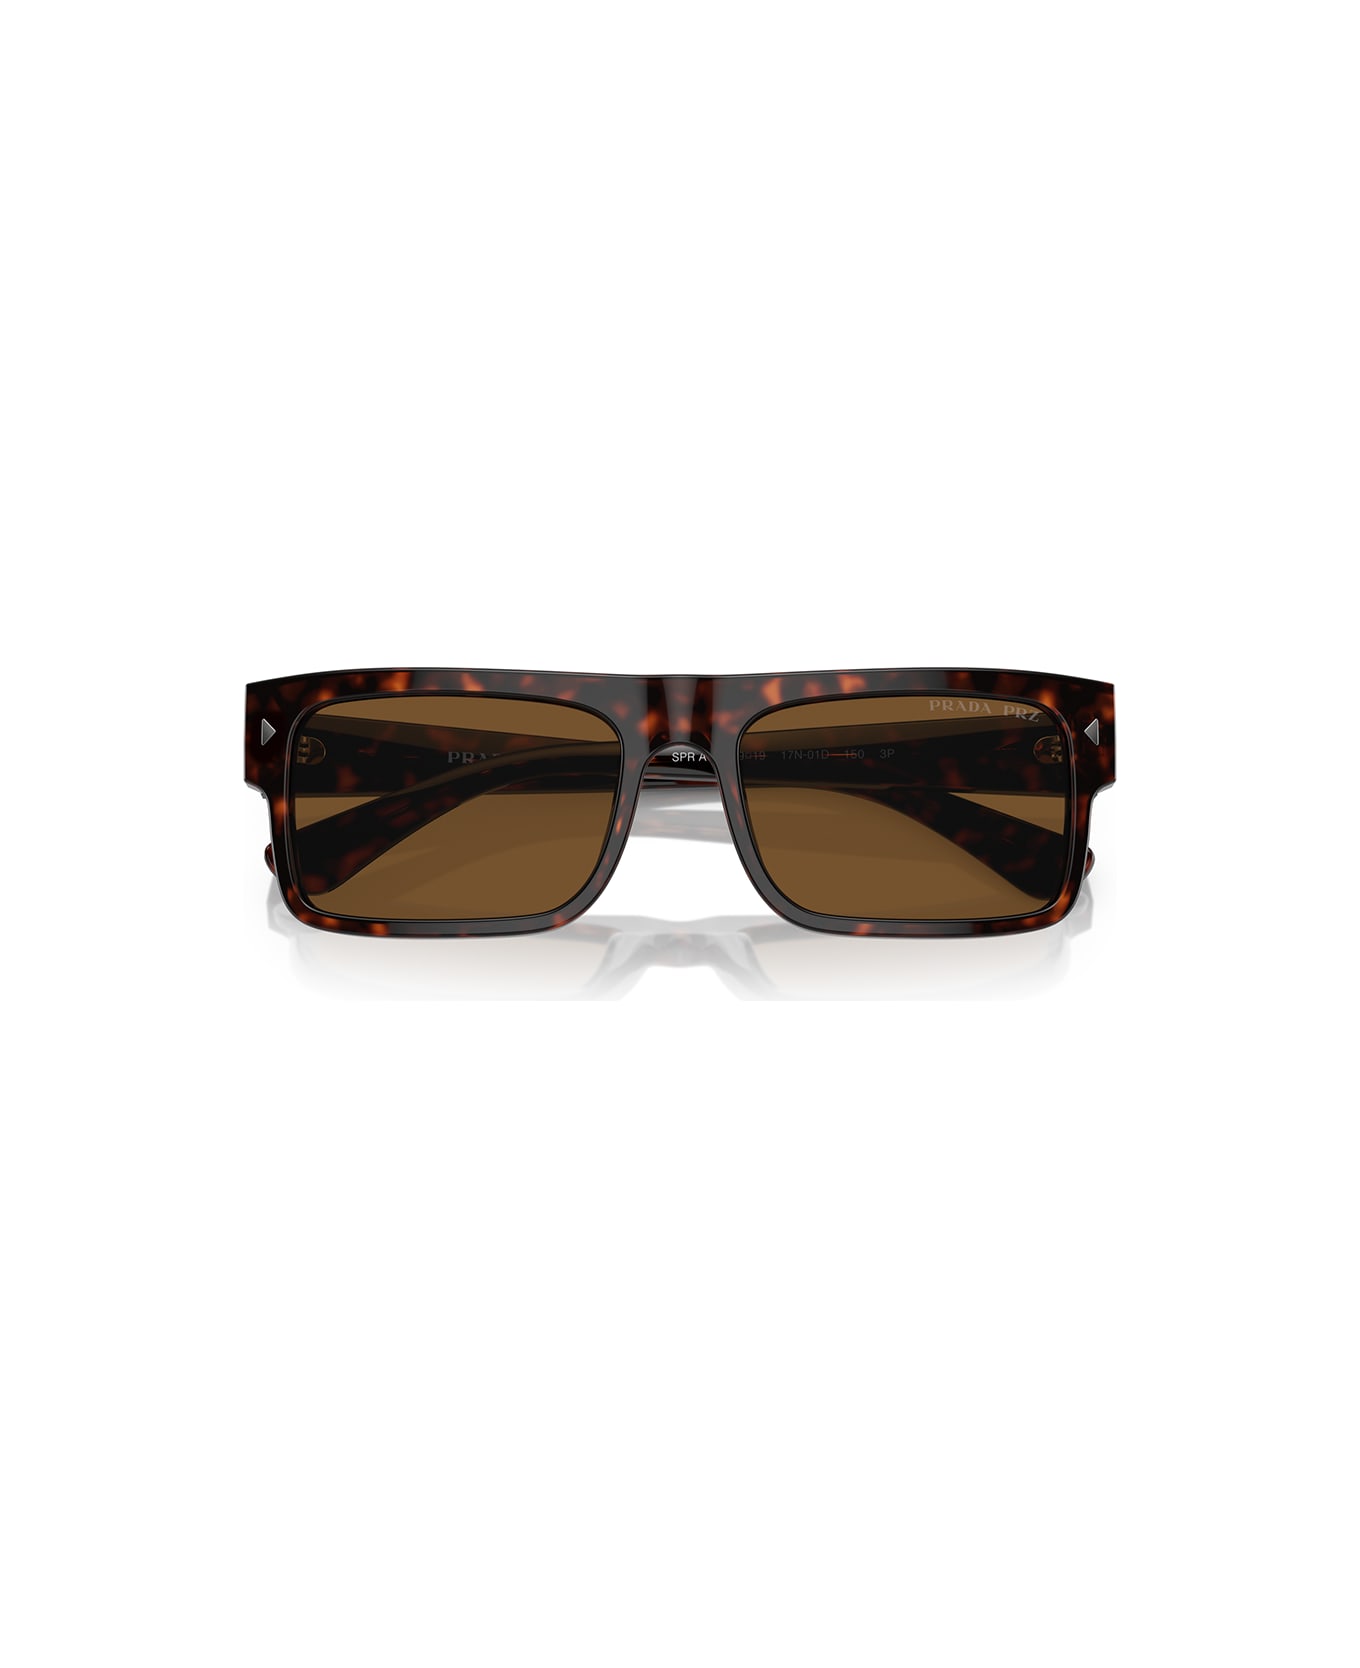 Prada Eyewear Sunglasses - Marrone/Marrone